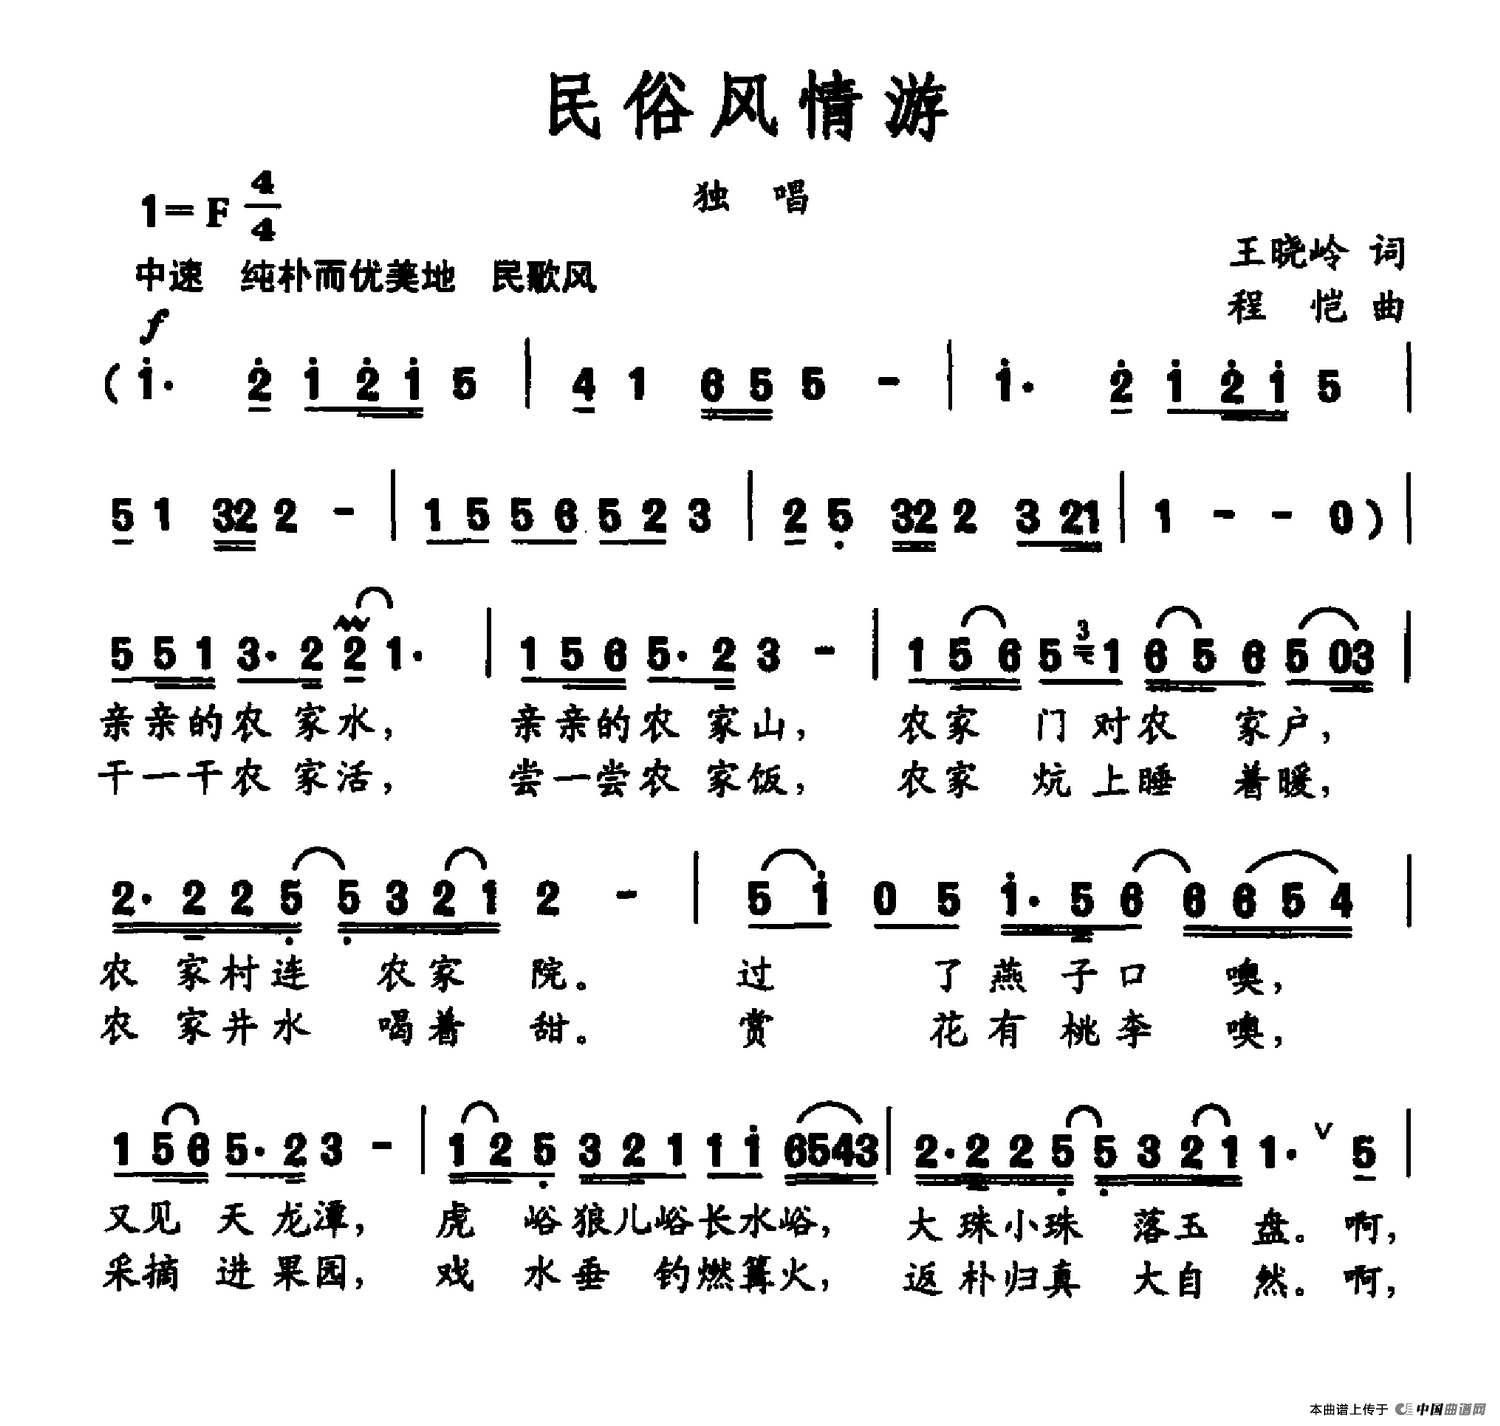 民俗风情游(1)_民俗风情游.png